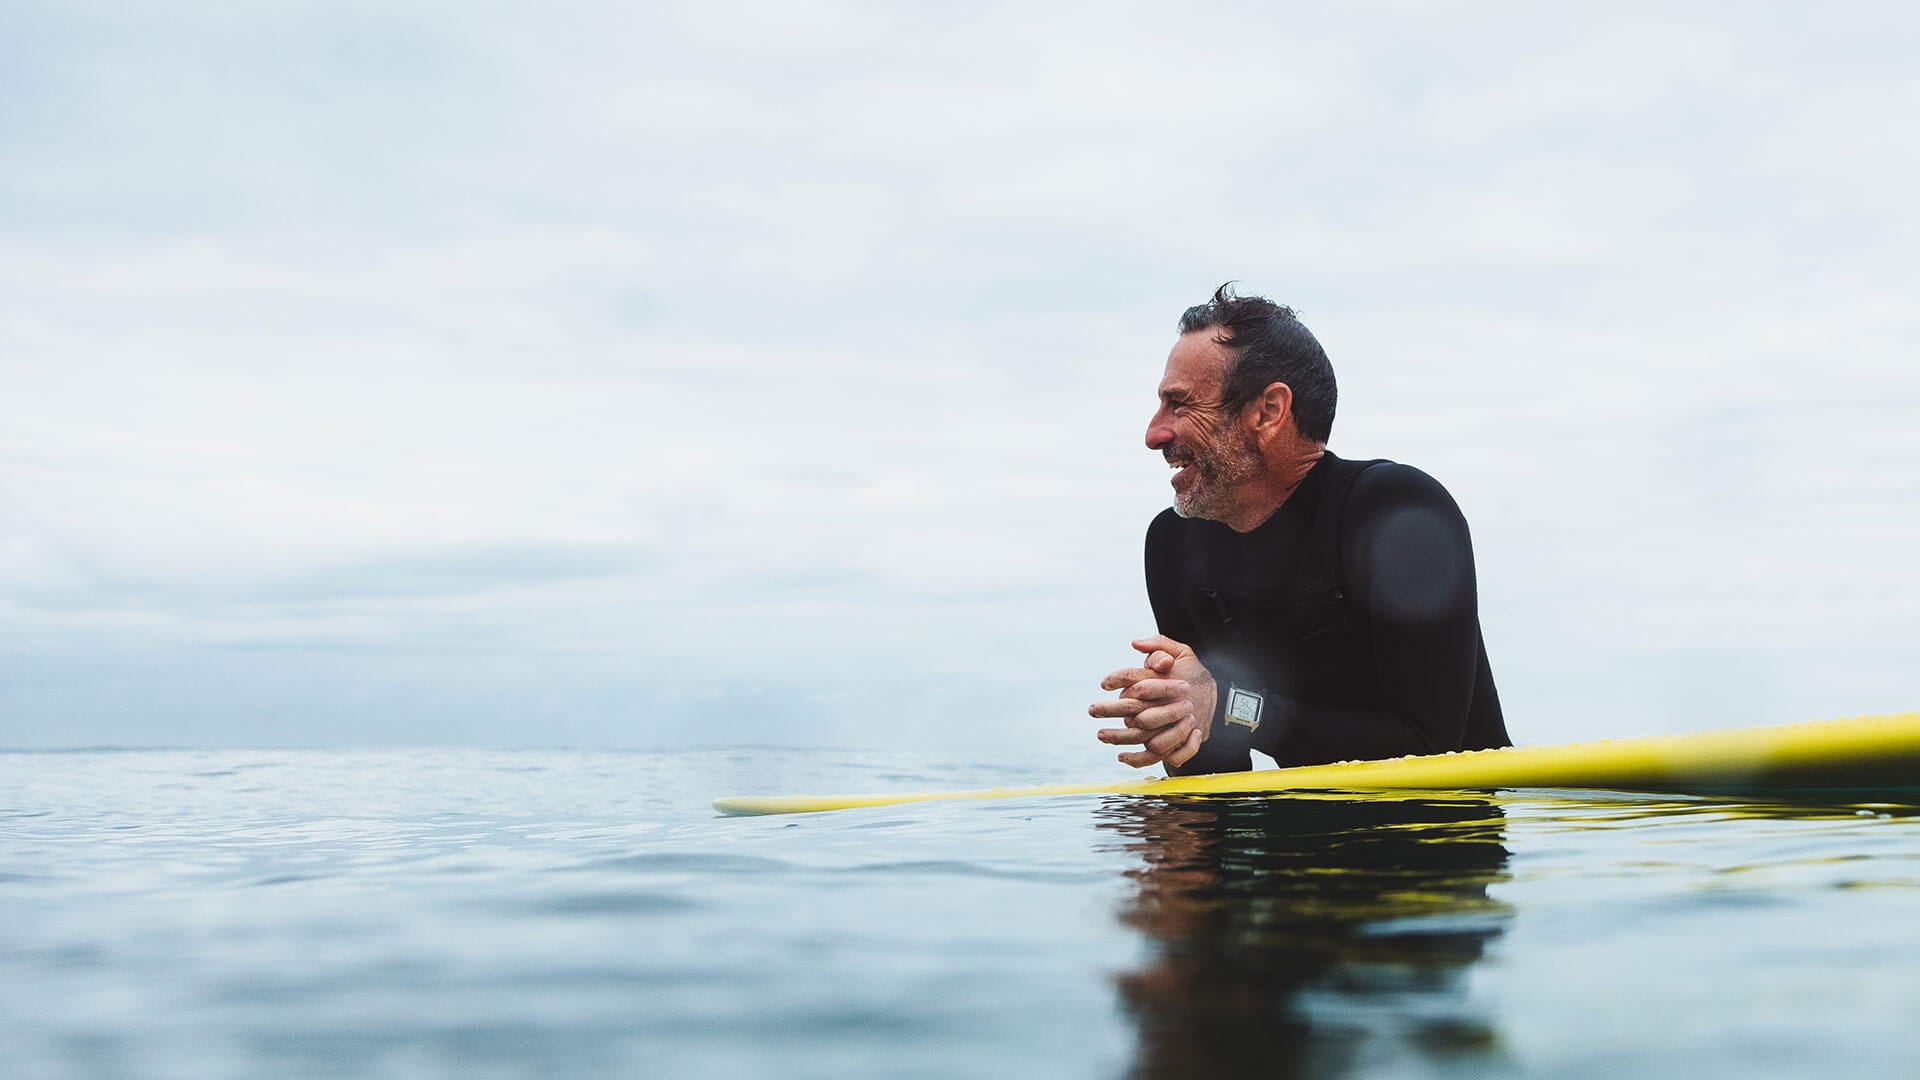 Mark Carter Surfing